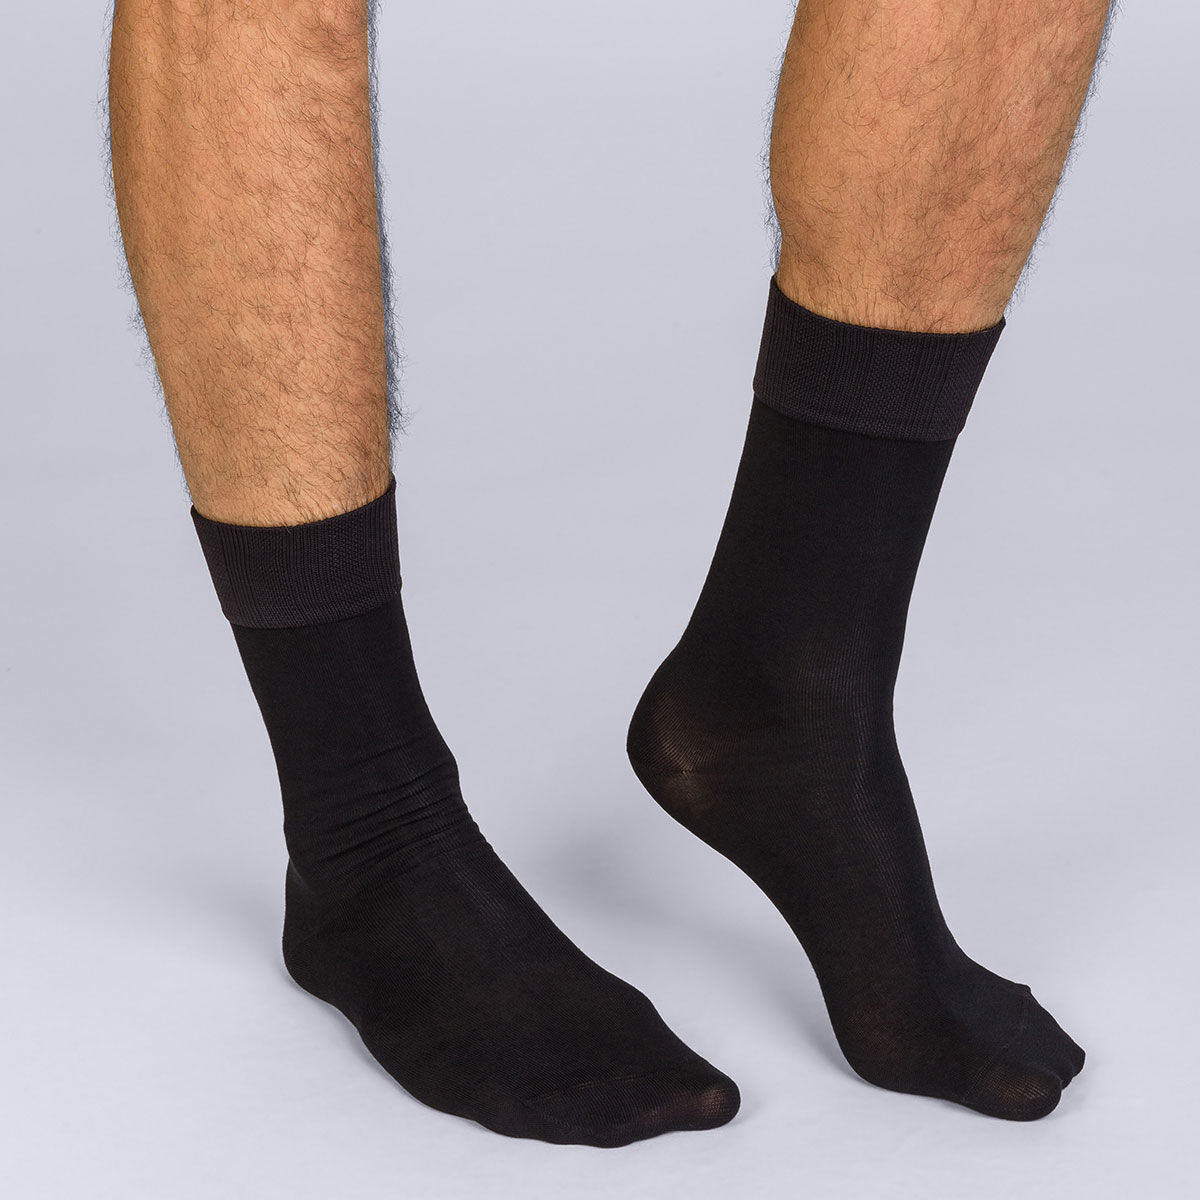 mid calf socks